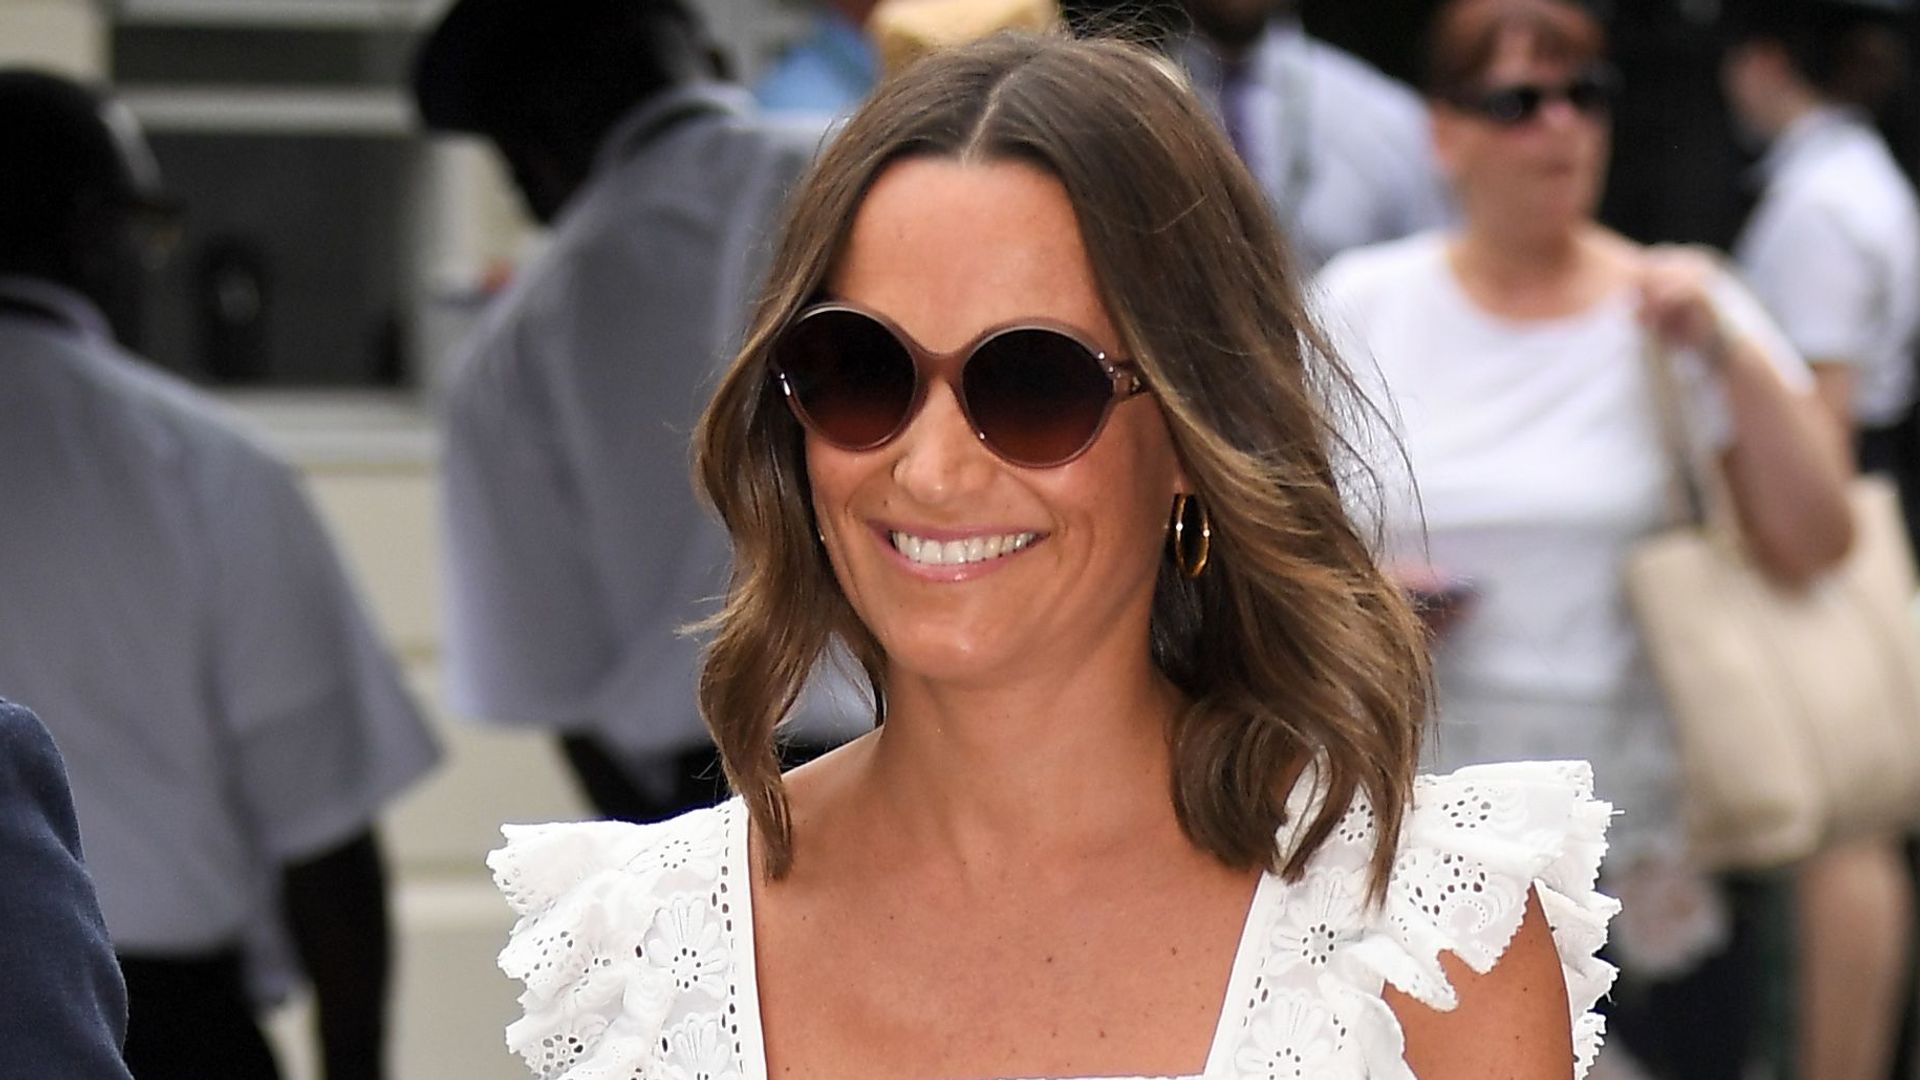 Pippa MIddleton wears a white dress and sunglasses at Wimbledon